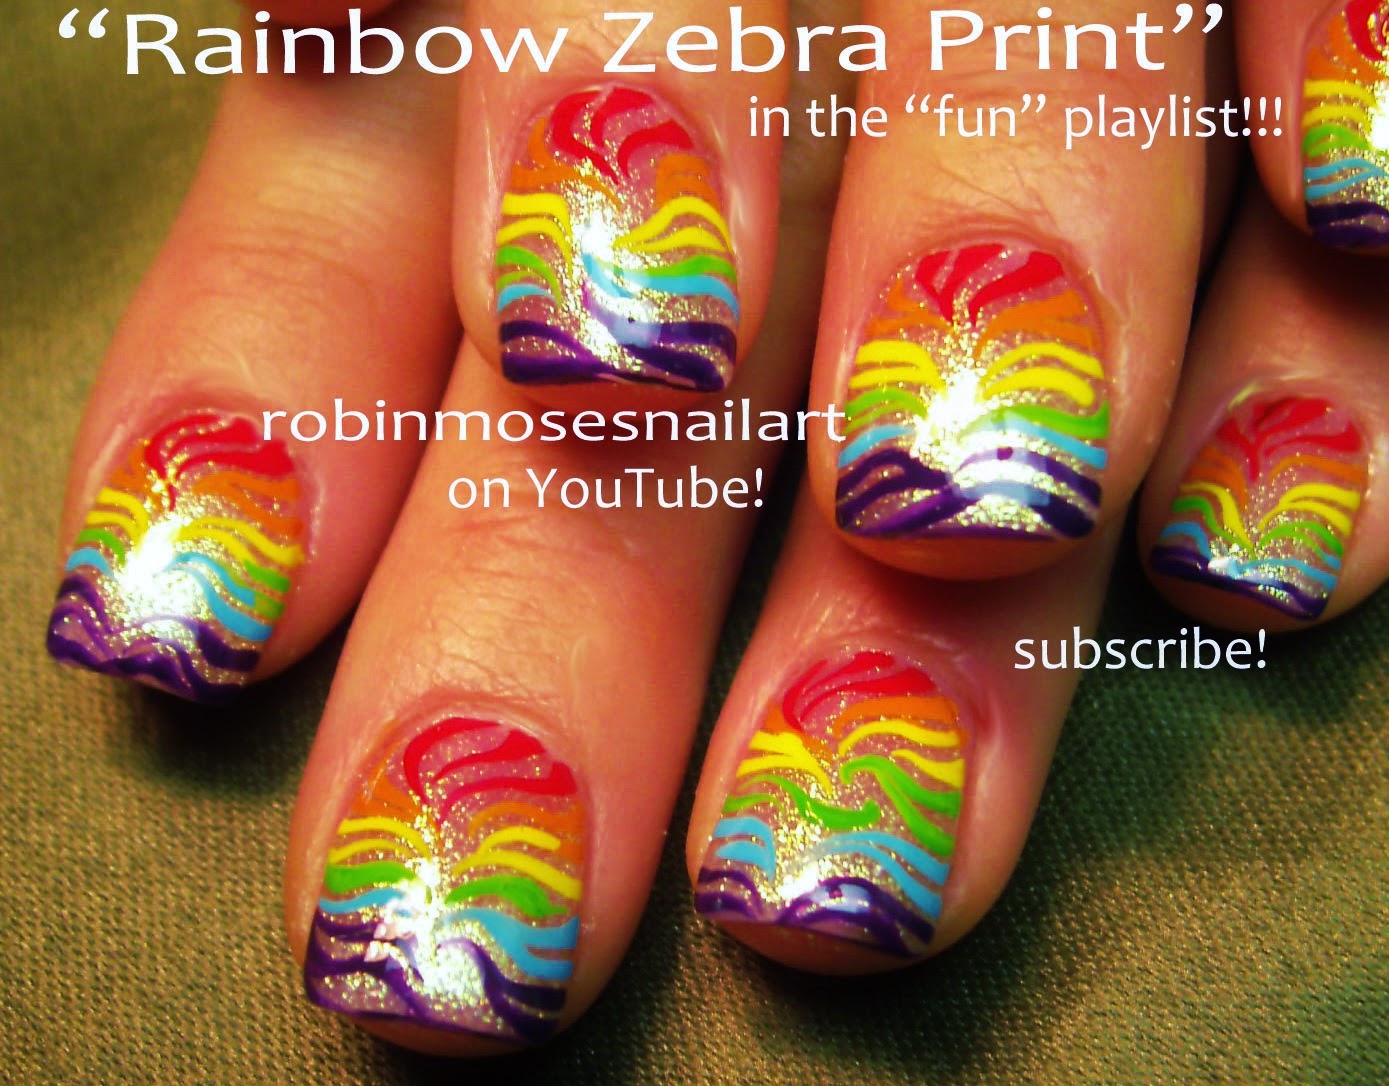 Rainbow Nail Art - wide 1